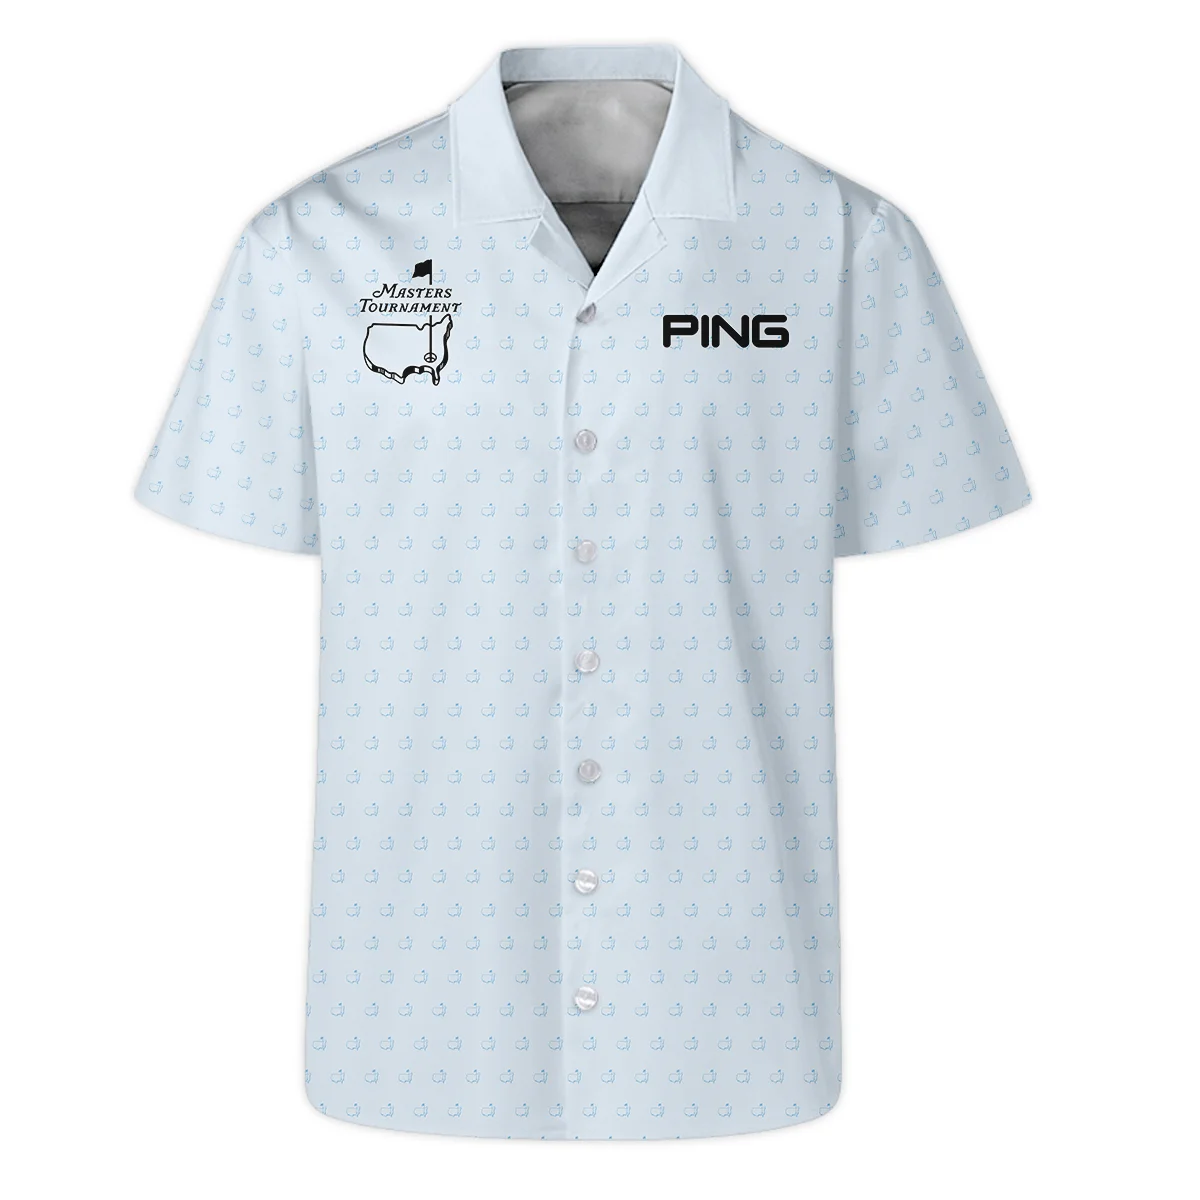 Pattern Masters Tournament Ping Unisex T-Shirt White Light Blue Color Pattern Logo  T-Shirt